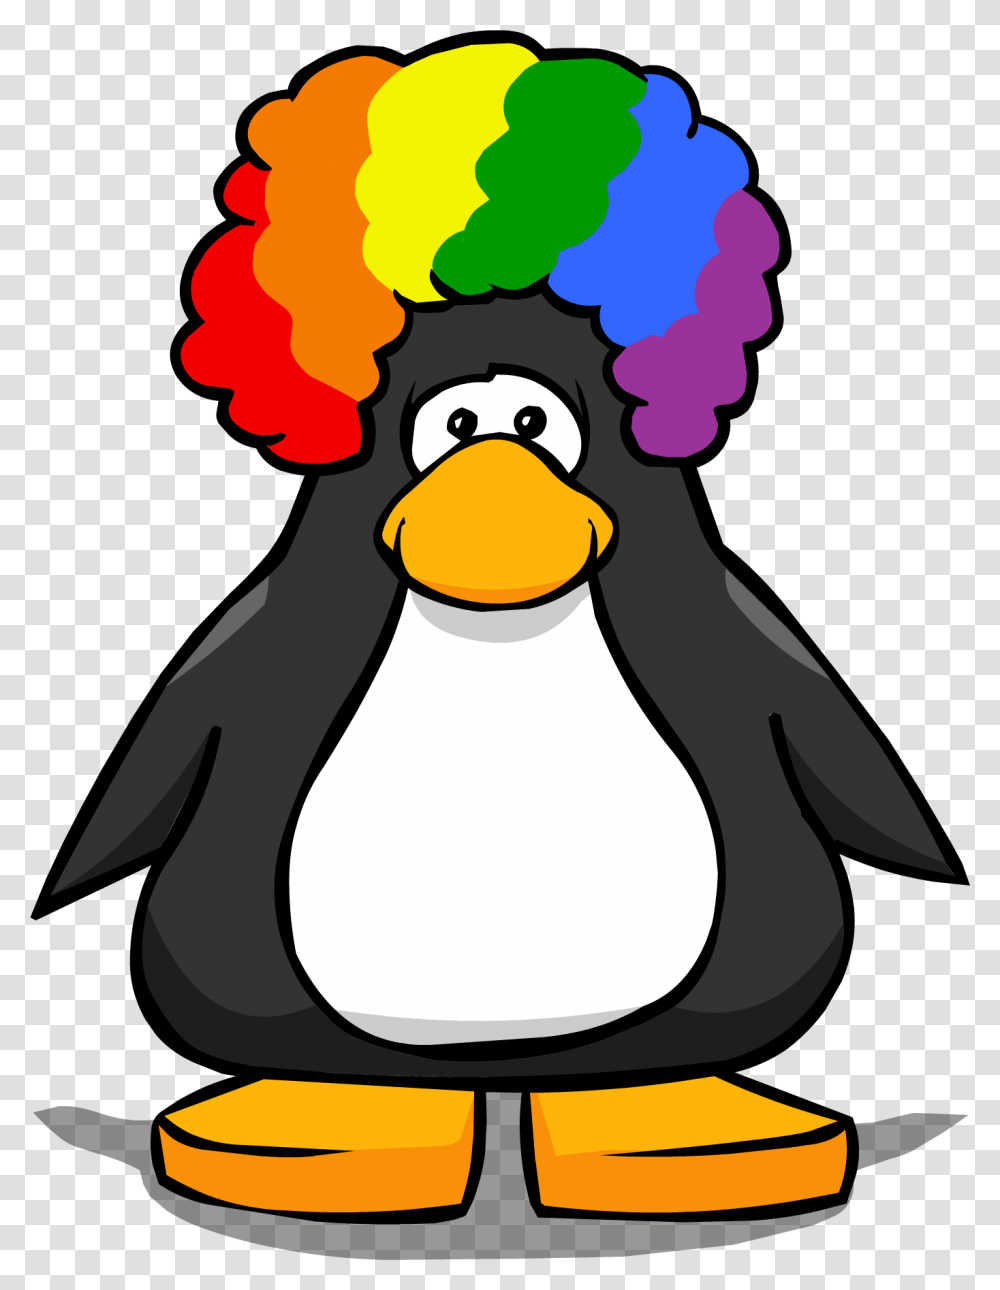 Club Penguin Wiki Penguin With Top Hat, Animal, Bird, King Penguin Transparent Png